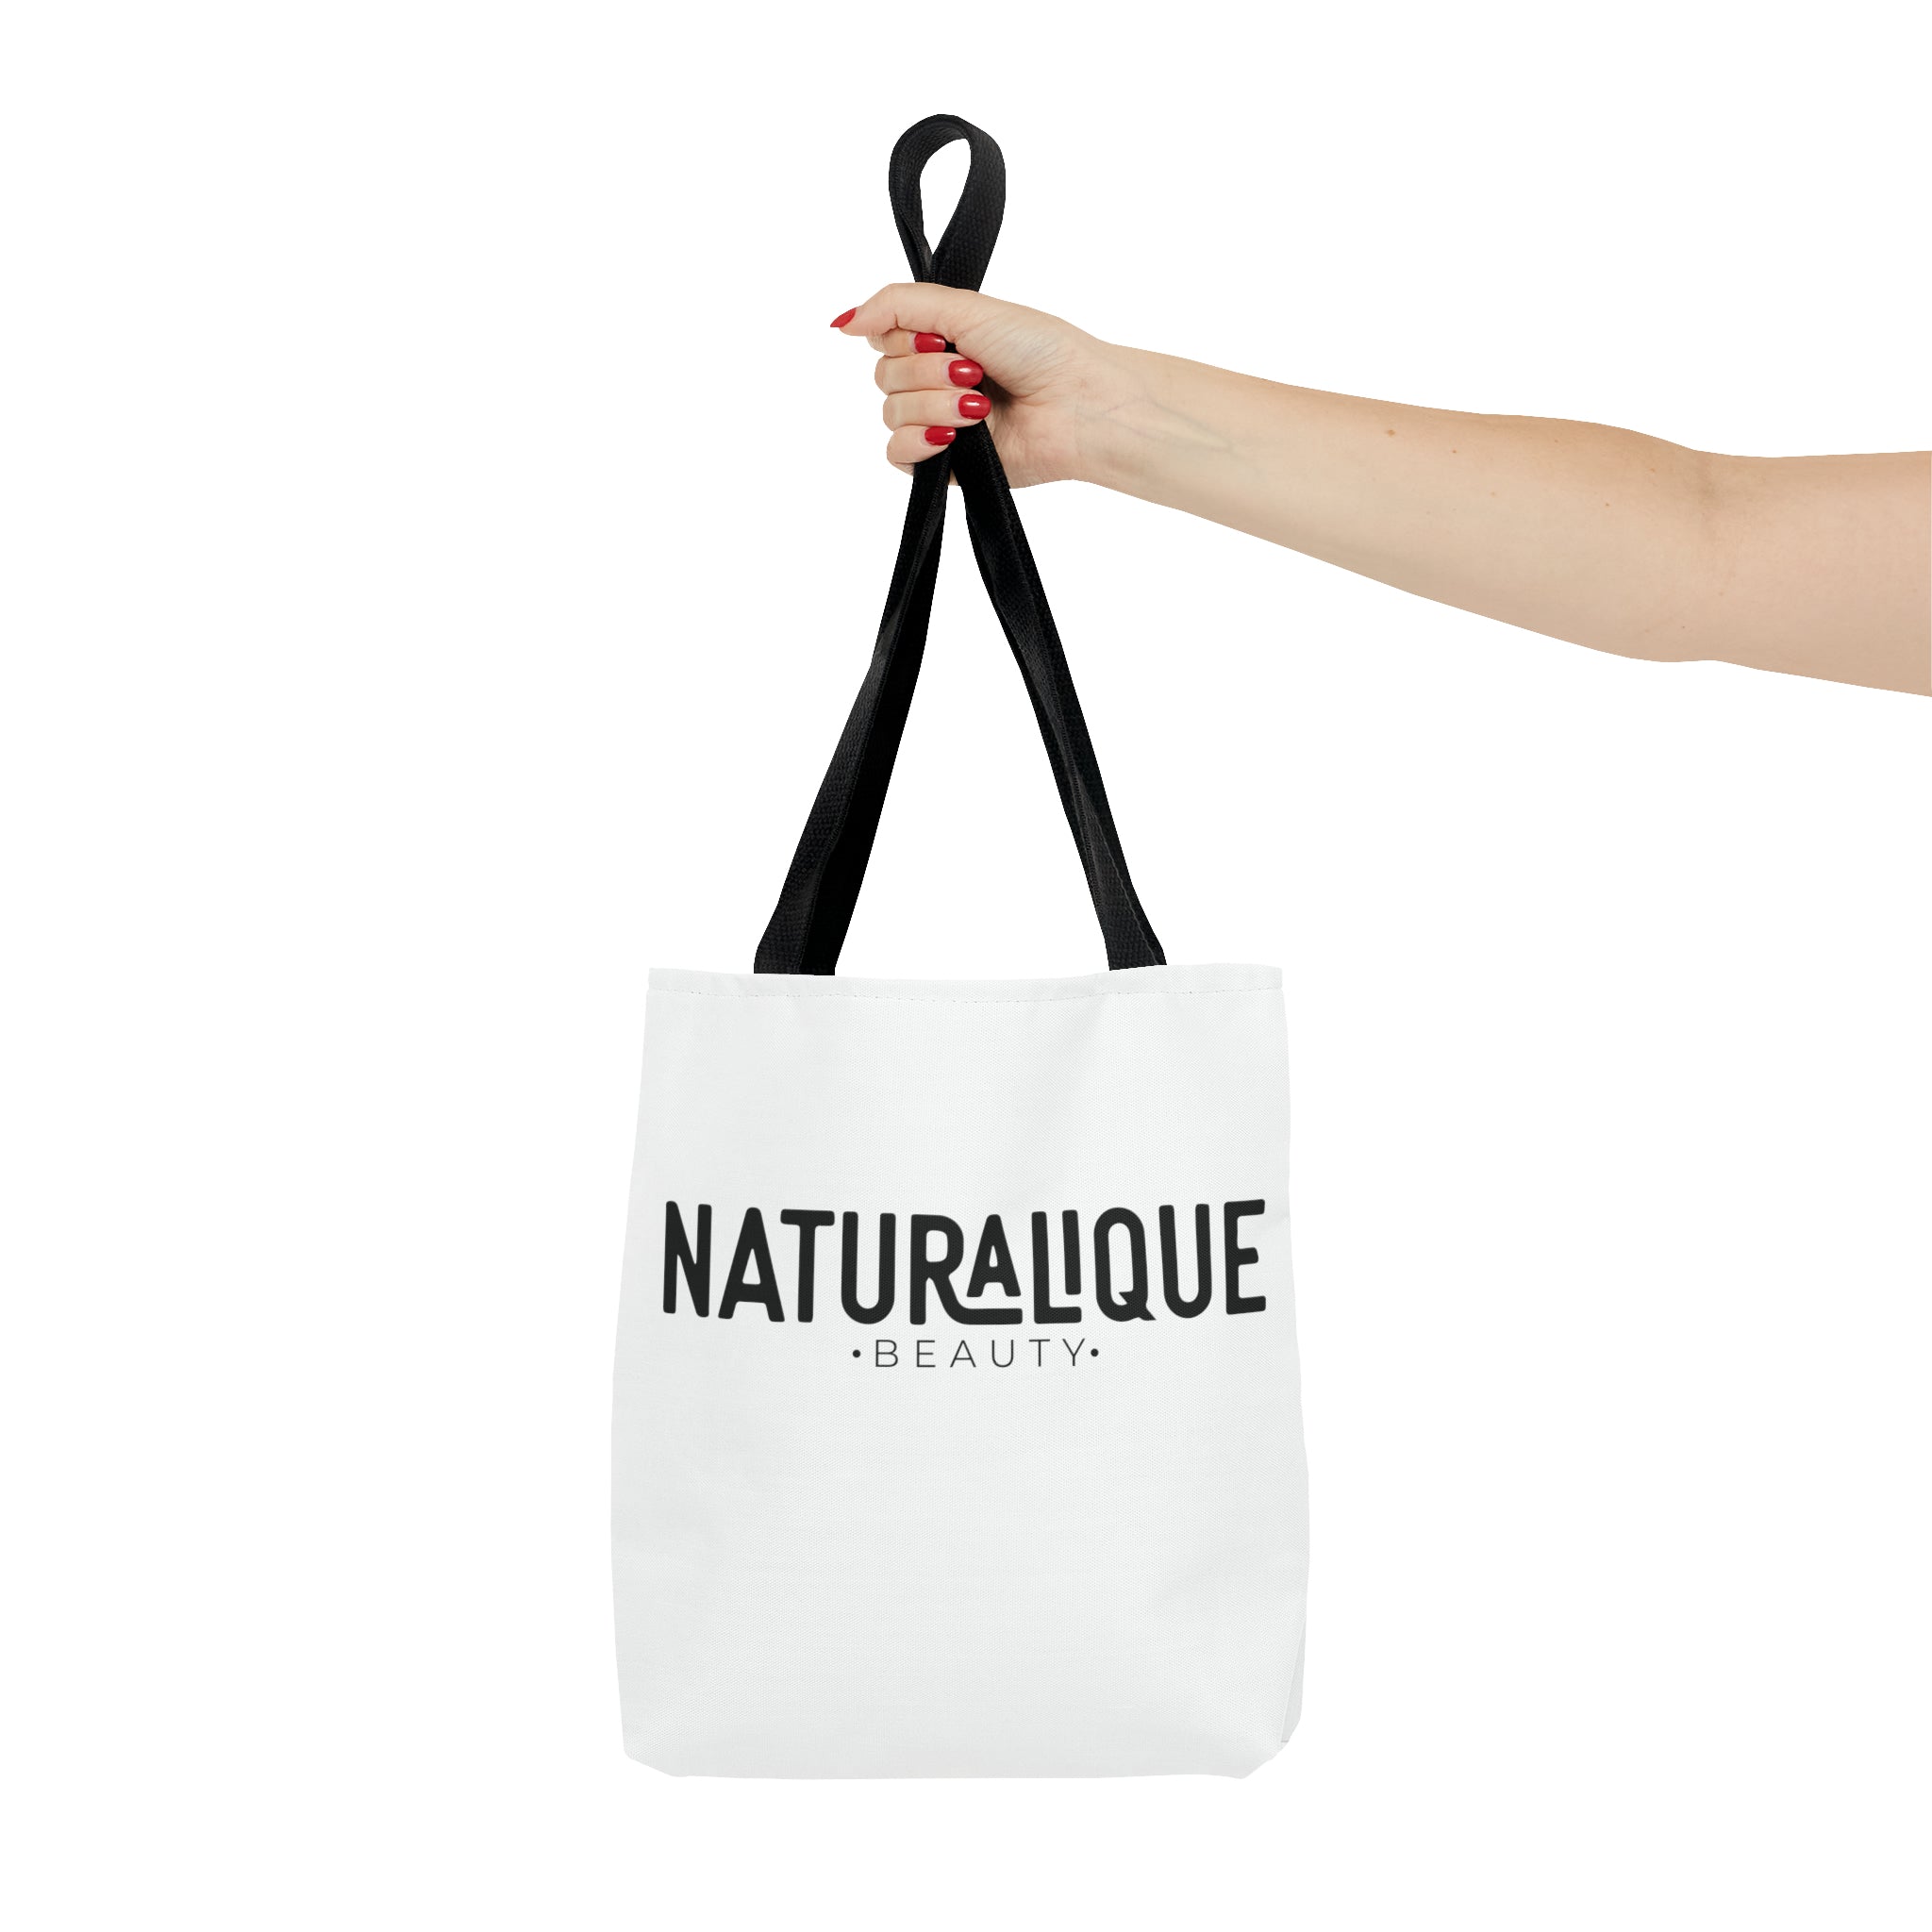 Naturalique Beauty Tote Bag - White